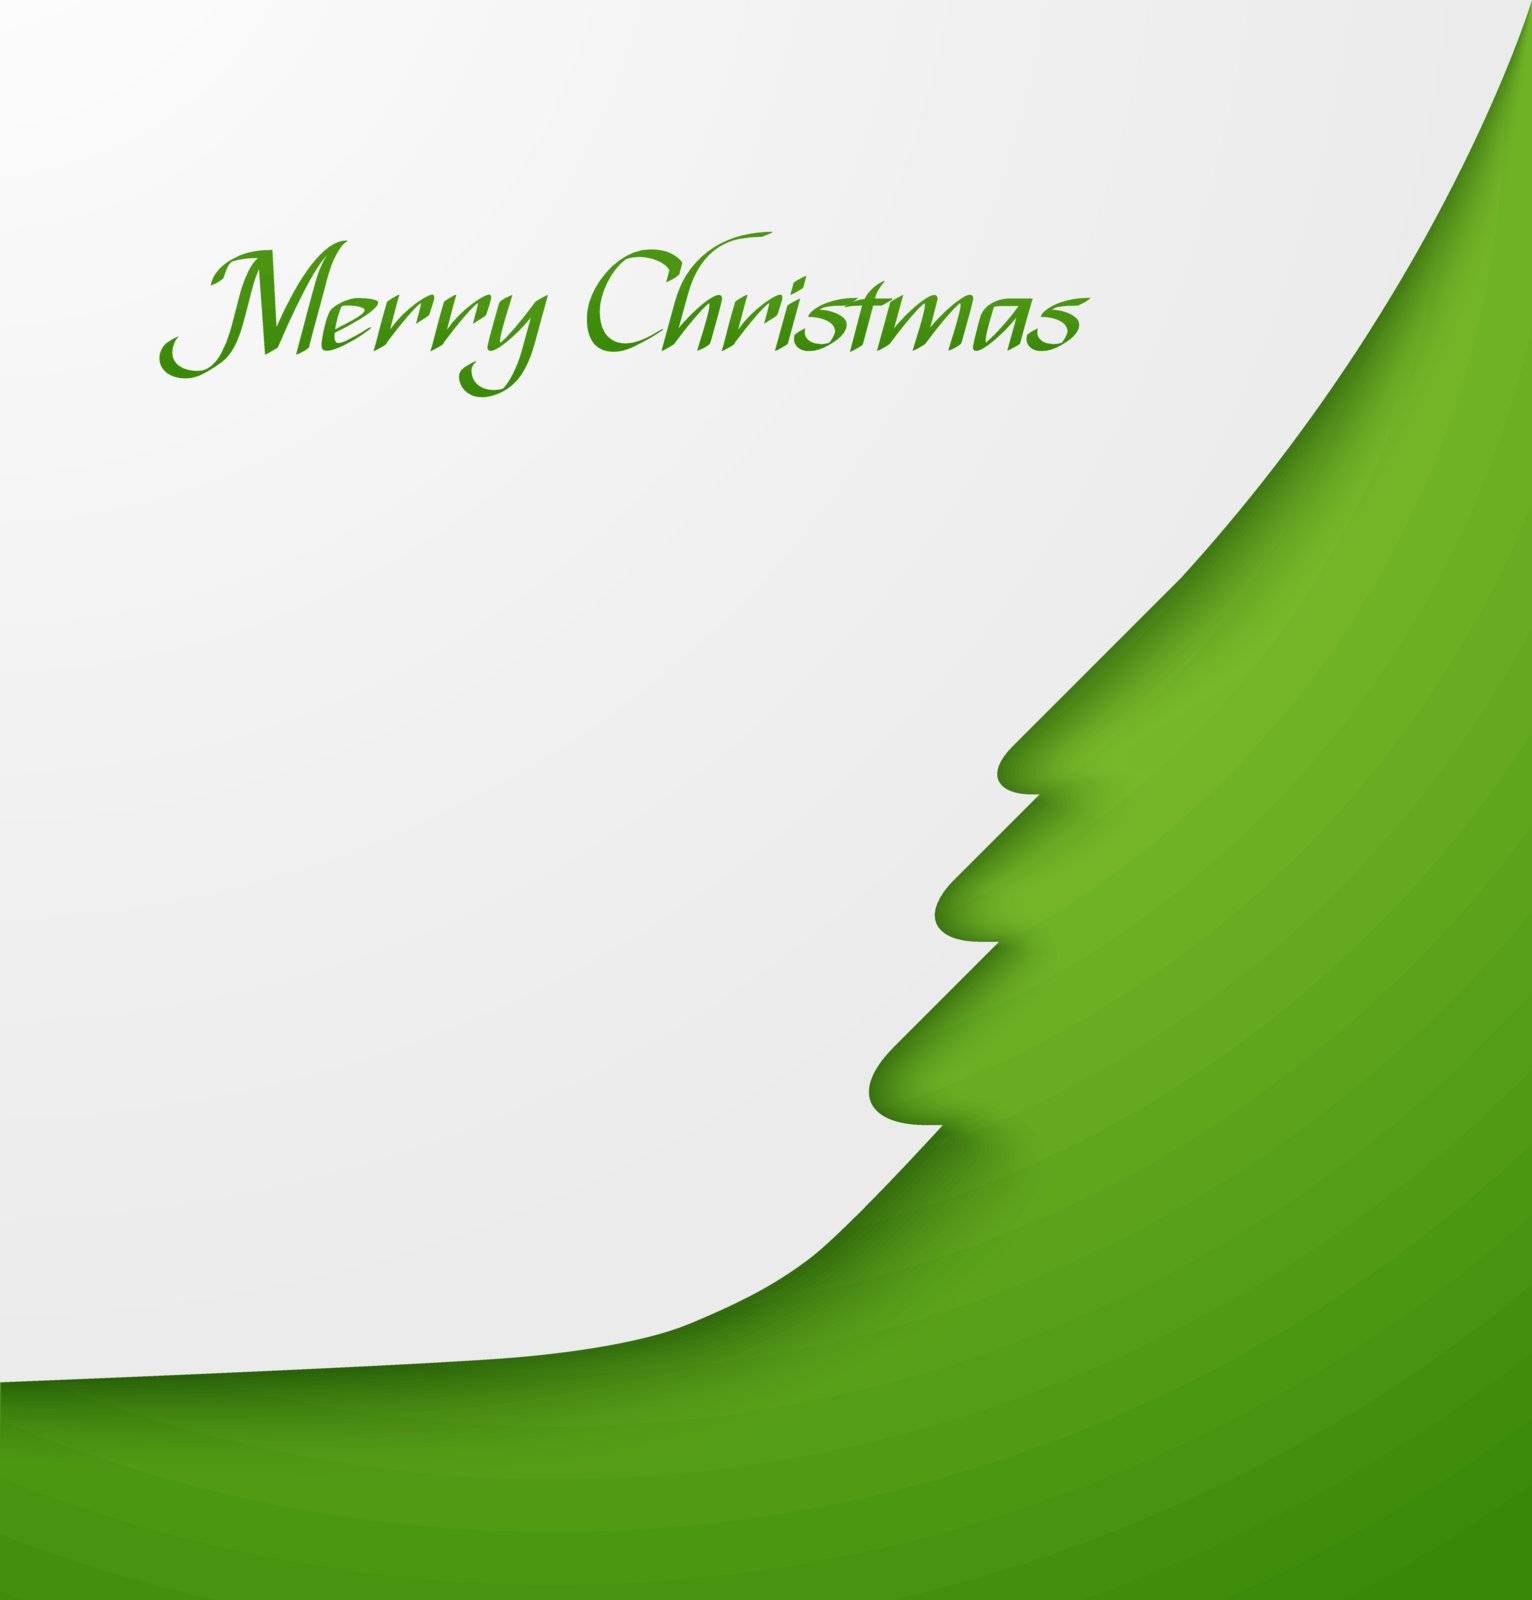 Green abstract christmas tree applique. Vector illustration